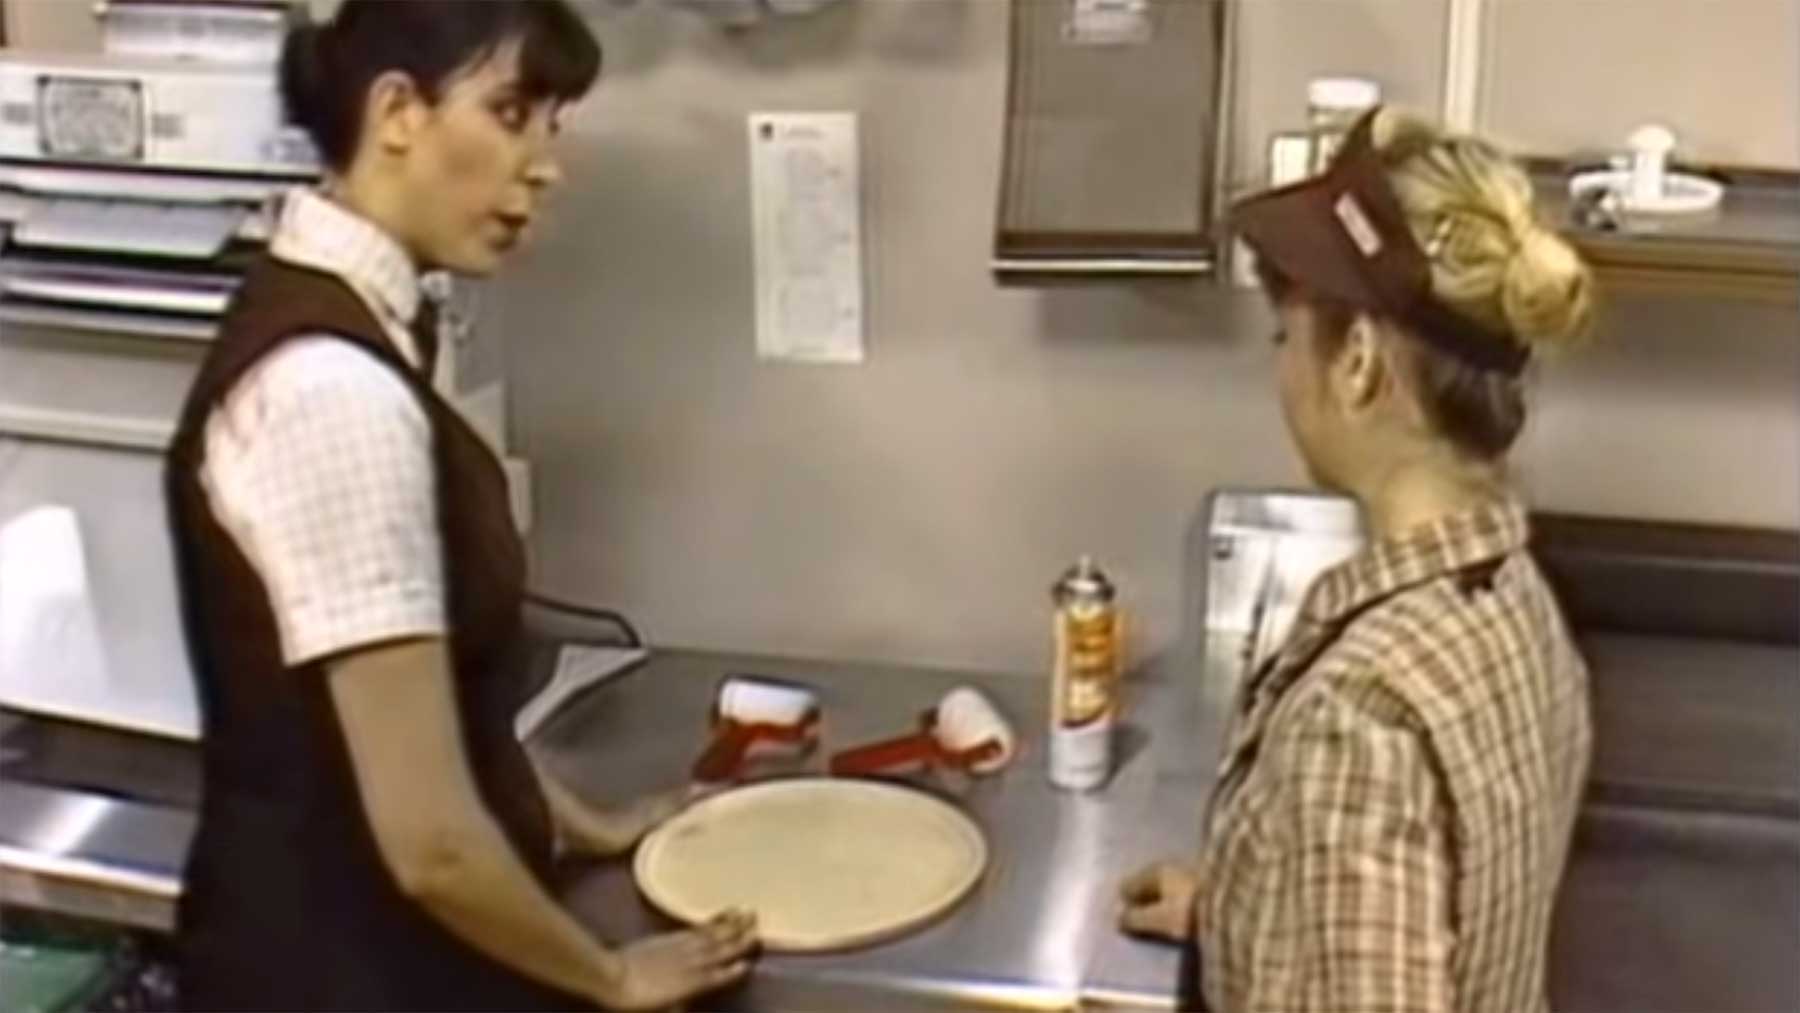 Pizza Hut Training Video 1988